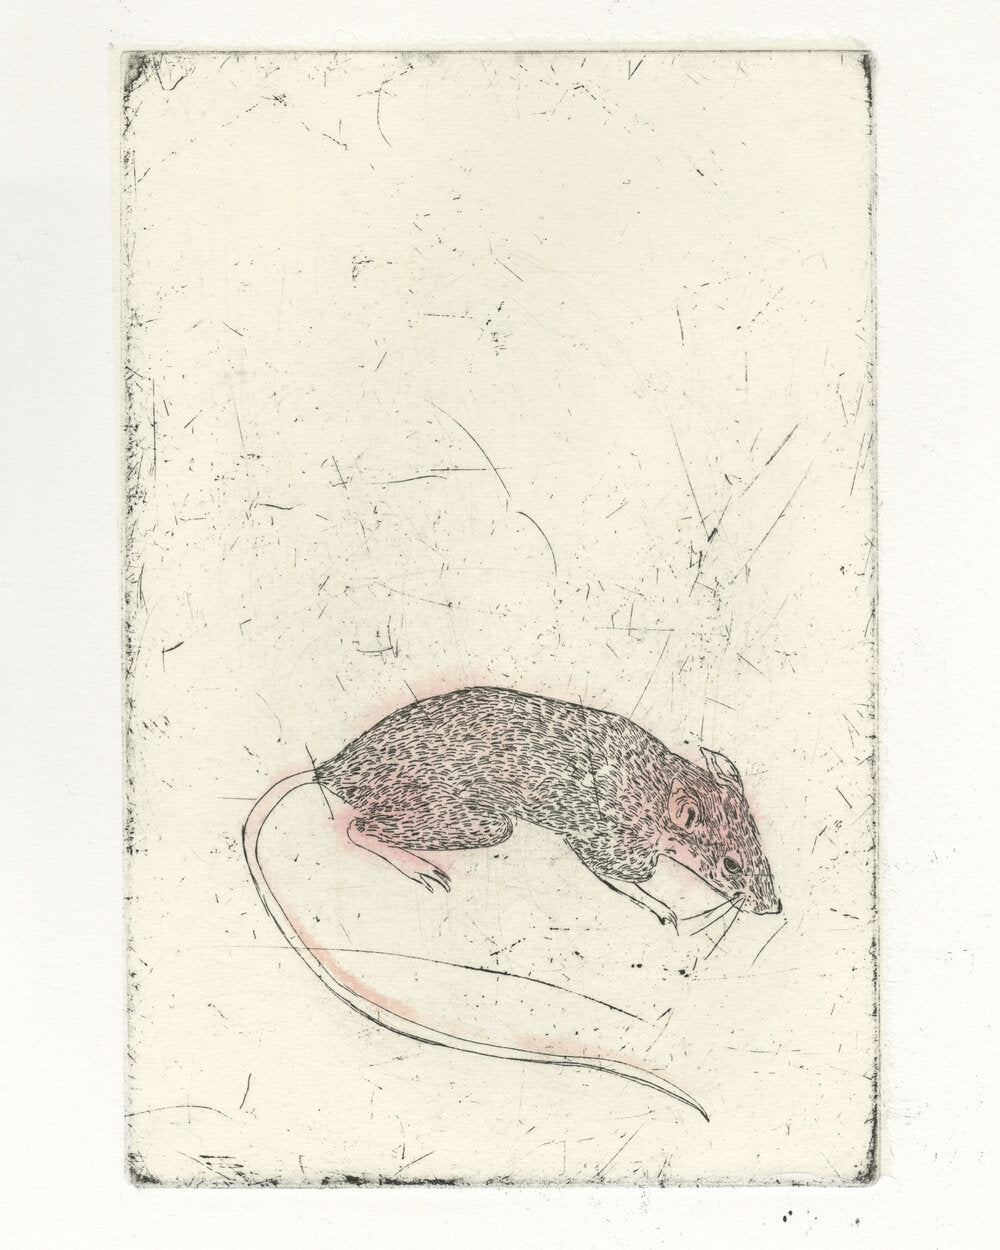 Magdalena Pawlowski, "Mouse"